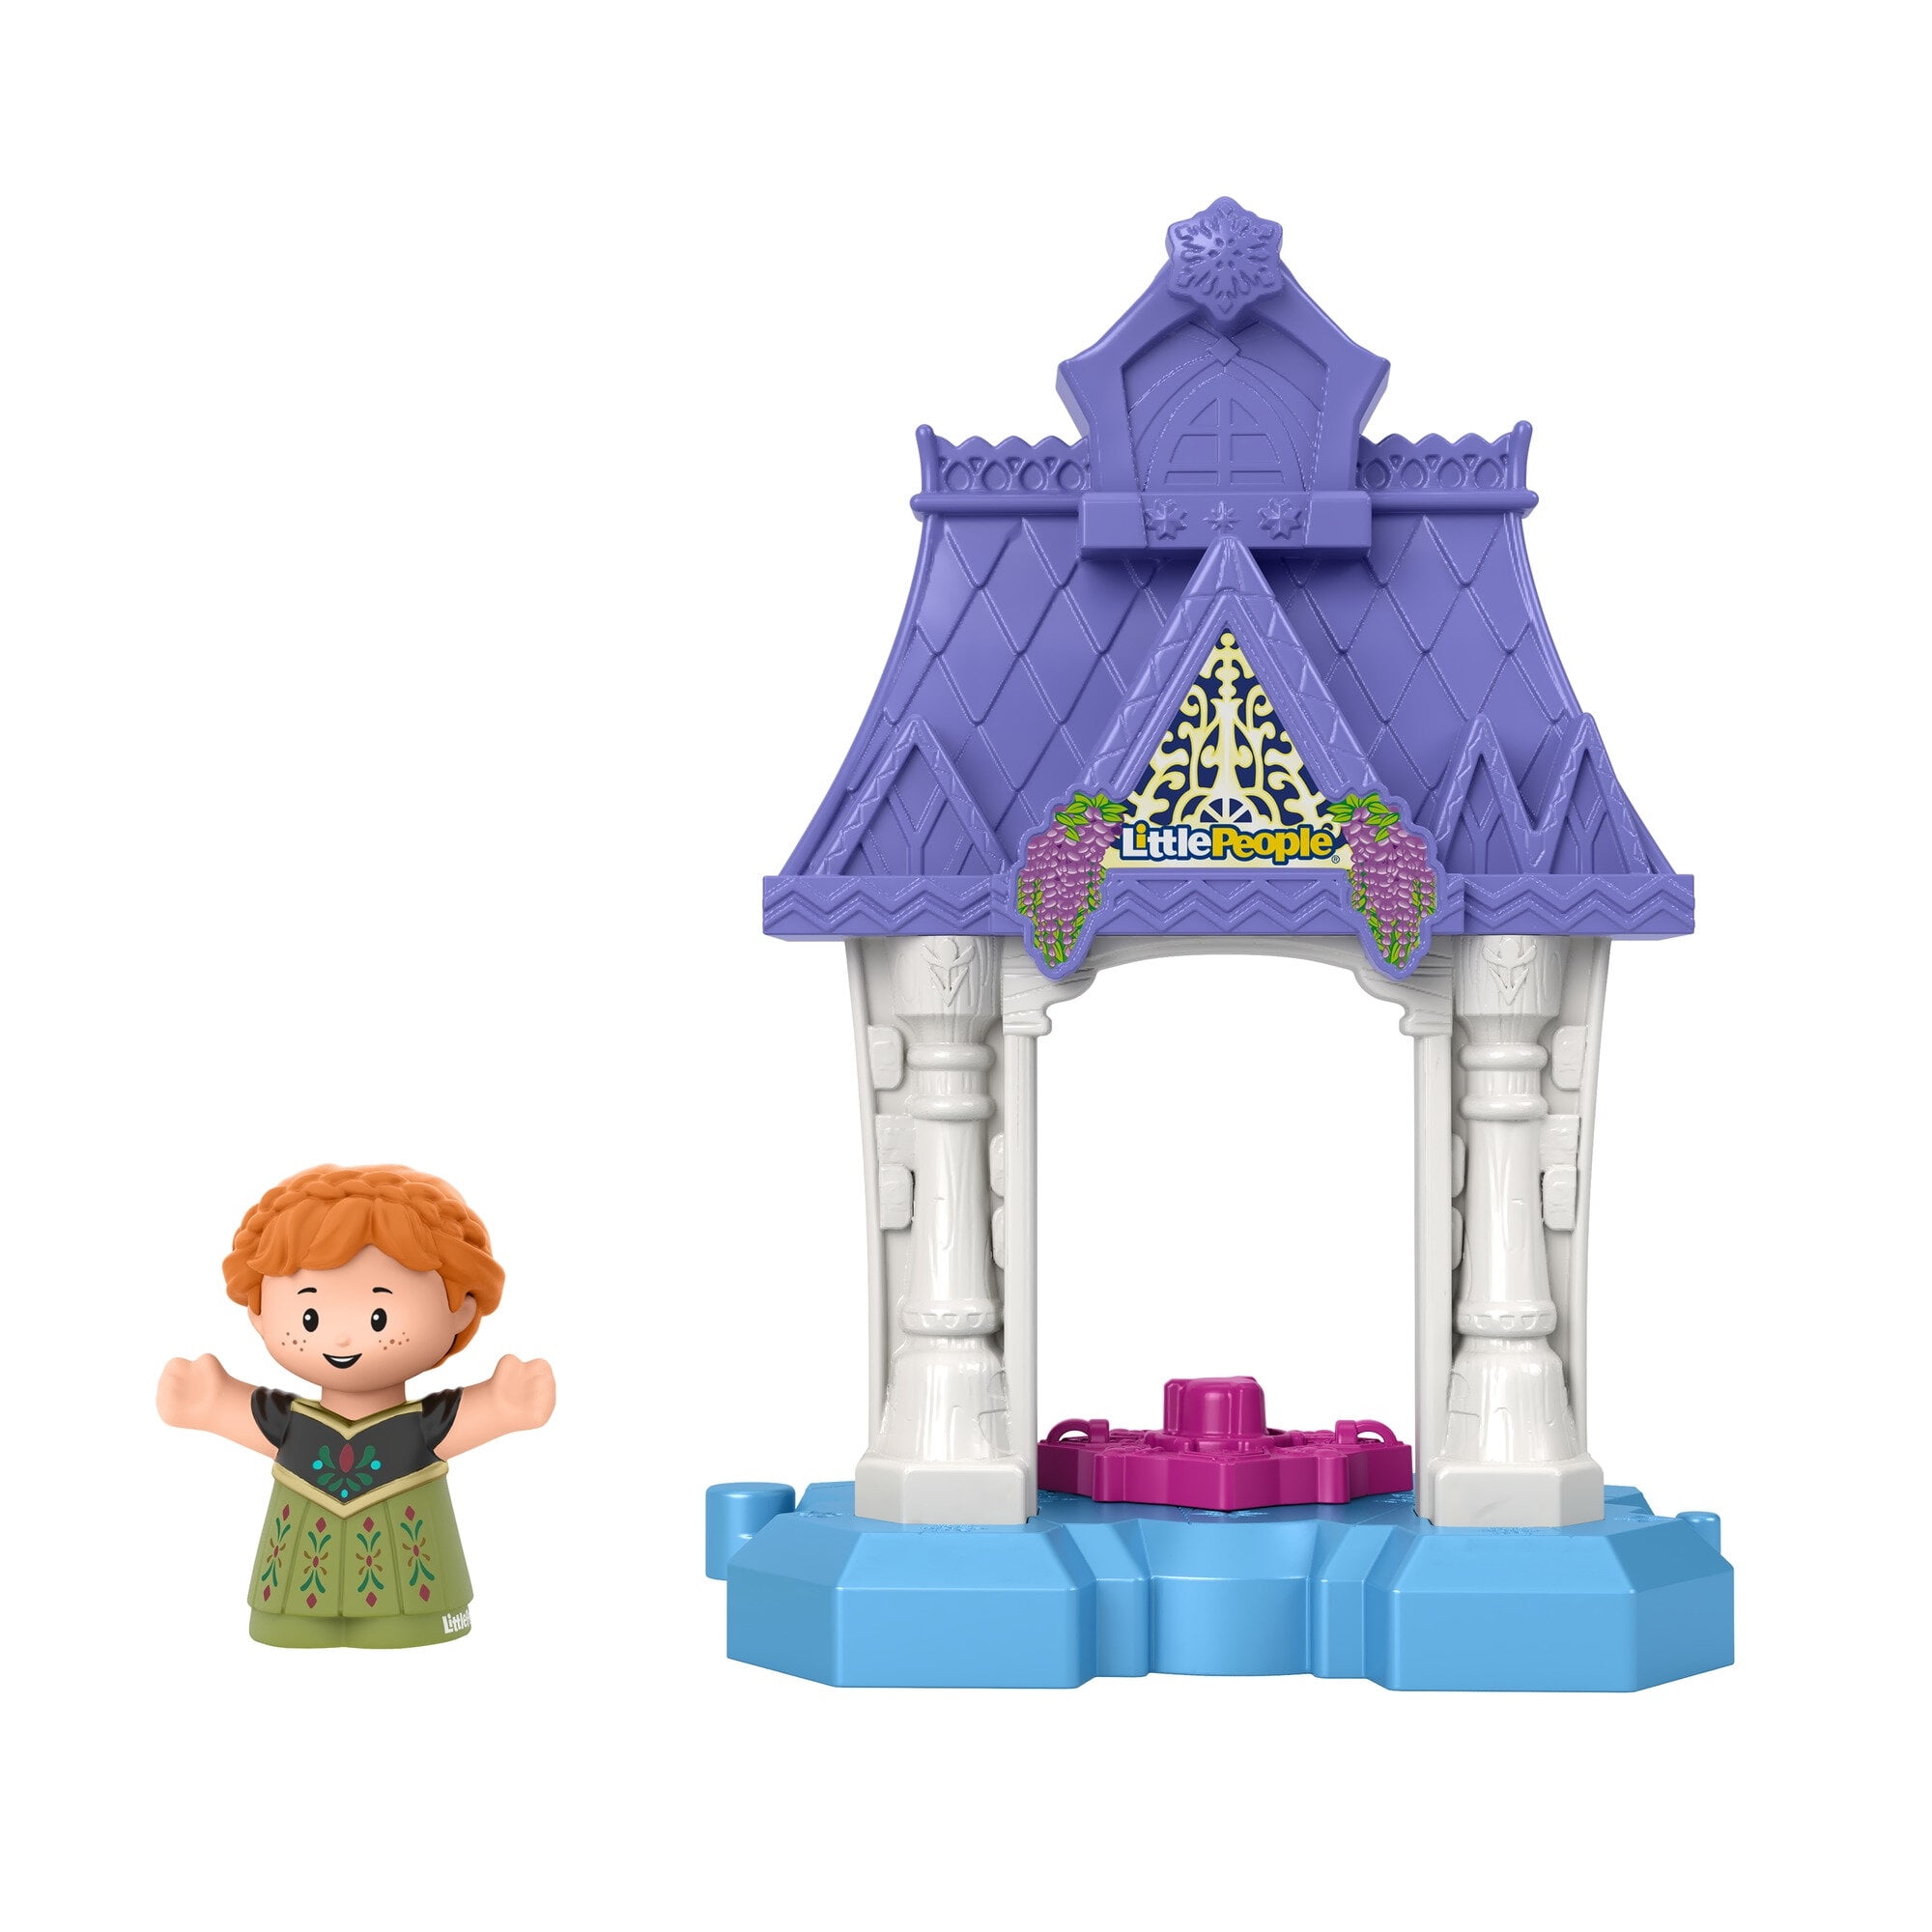 Disney Frozen Little Kingdom Birthday Gift Shop 